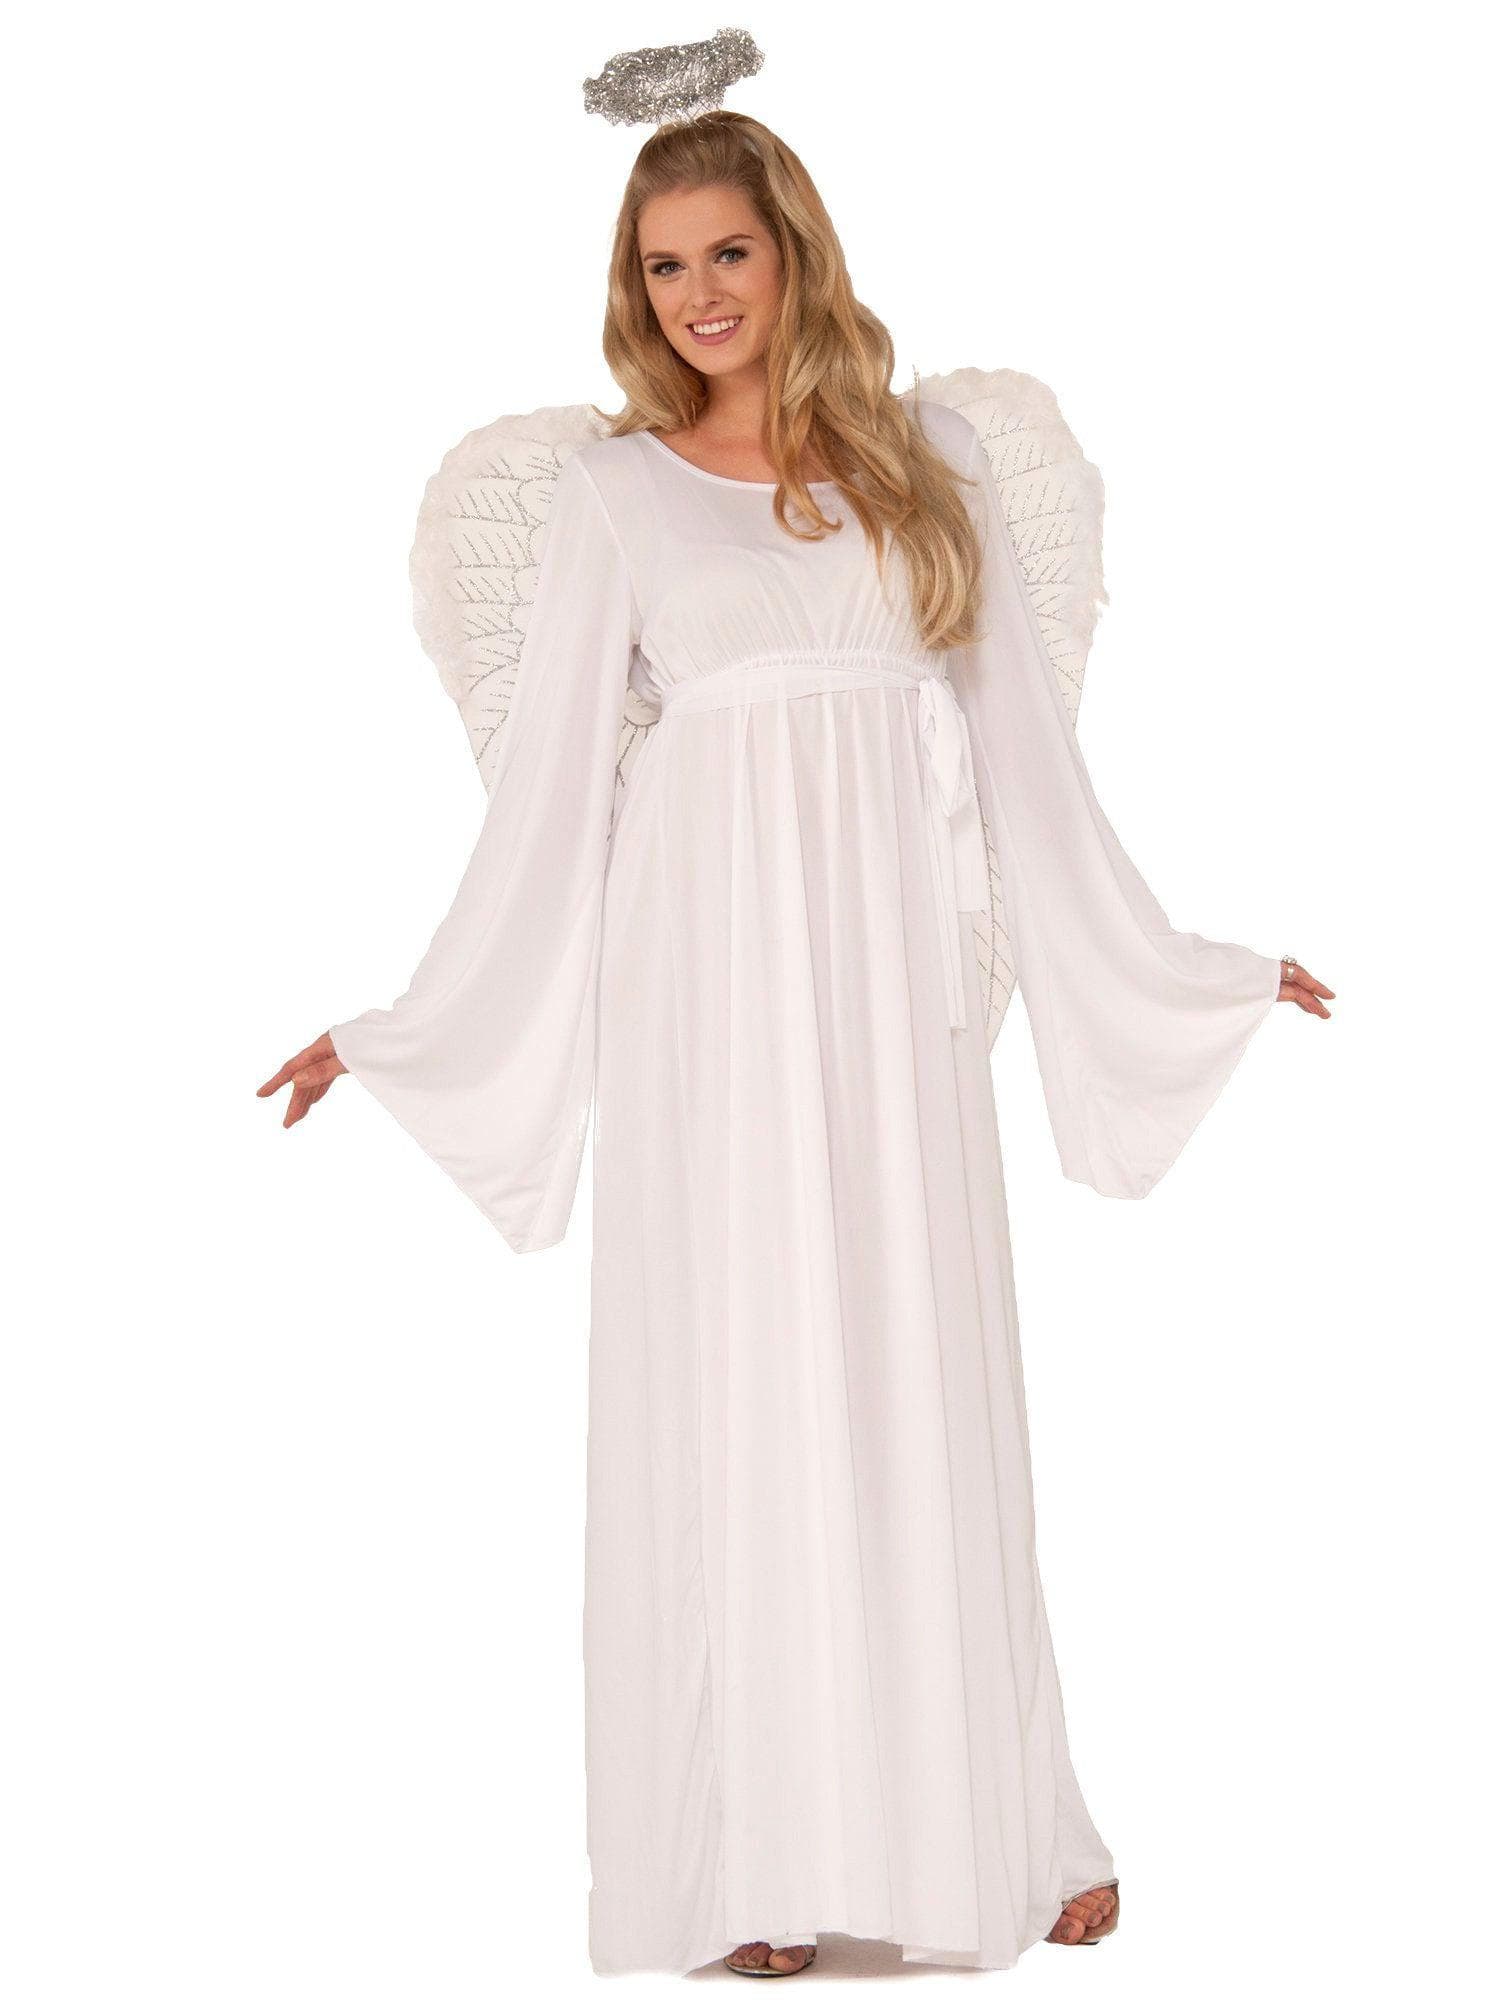 Women's Angelic Robe and Halo - costumes.com